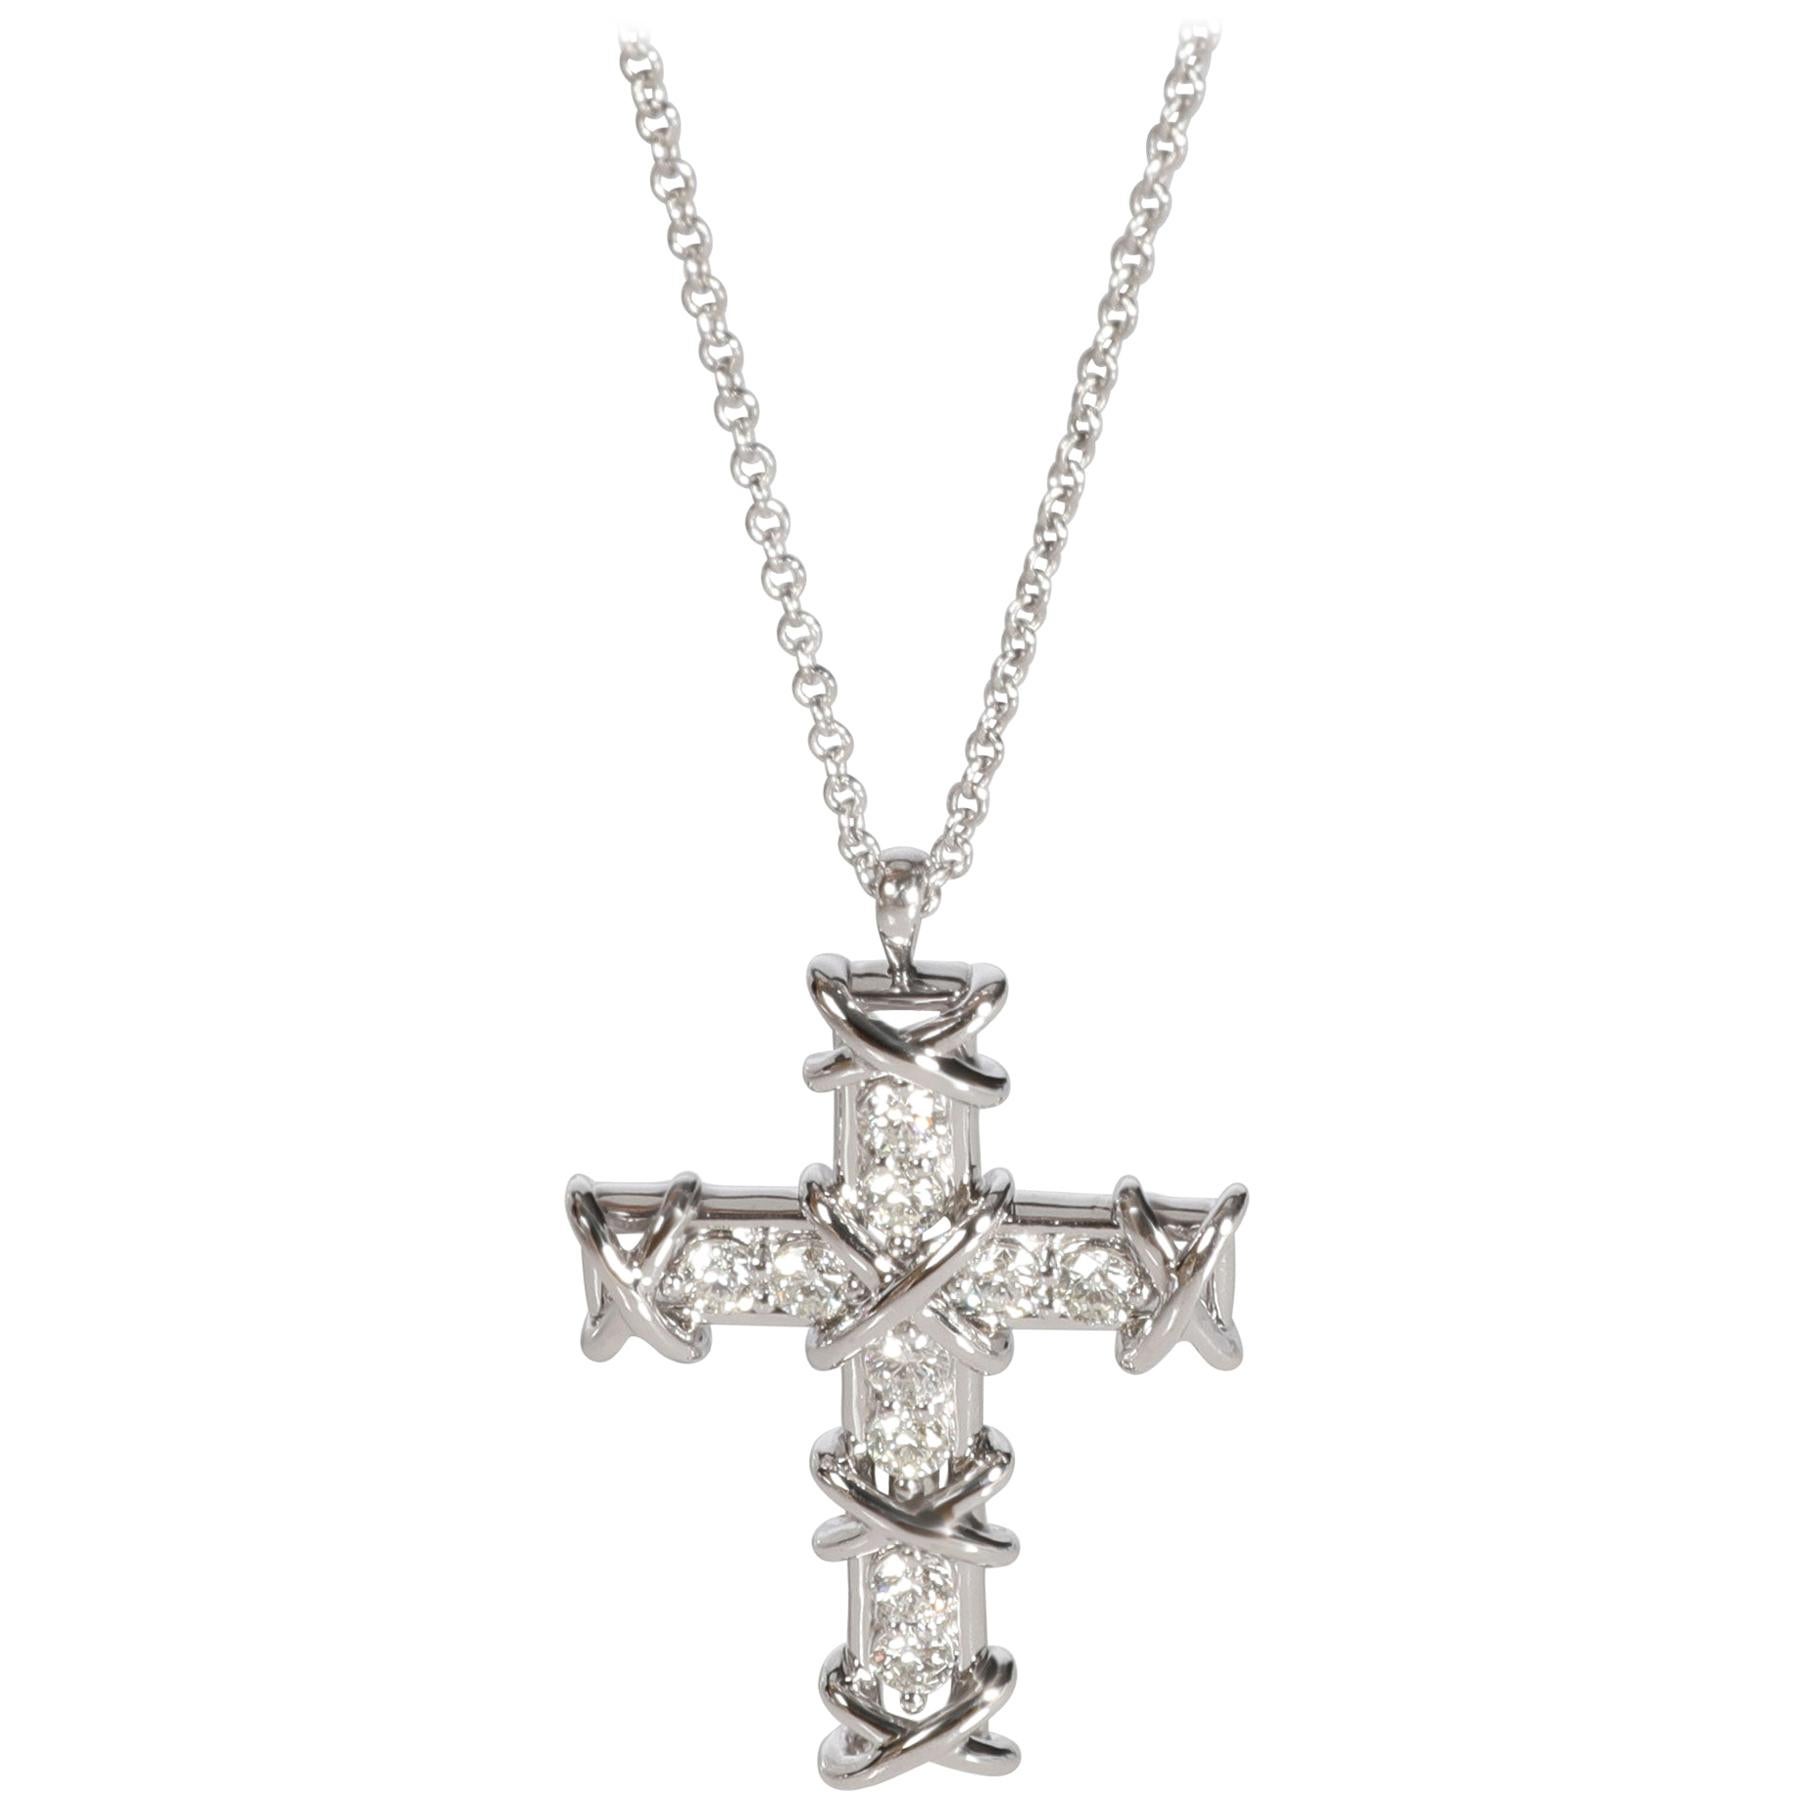 Tiffany & Co. Schlumberger Diamond Necklace in Platinum 0.35 Carat